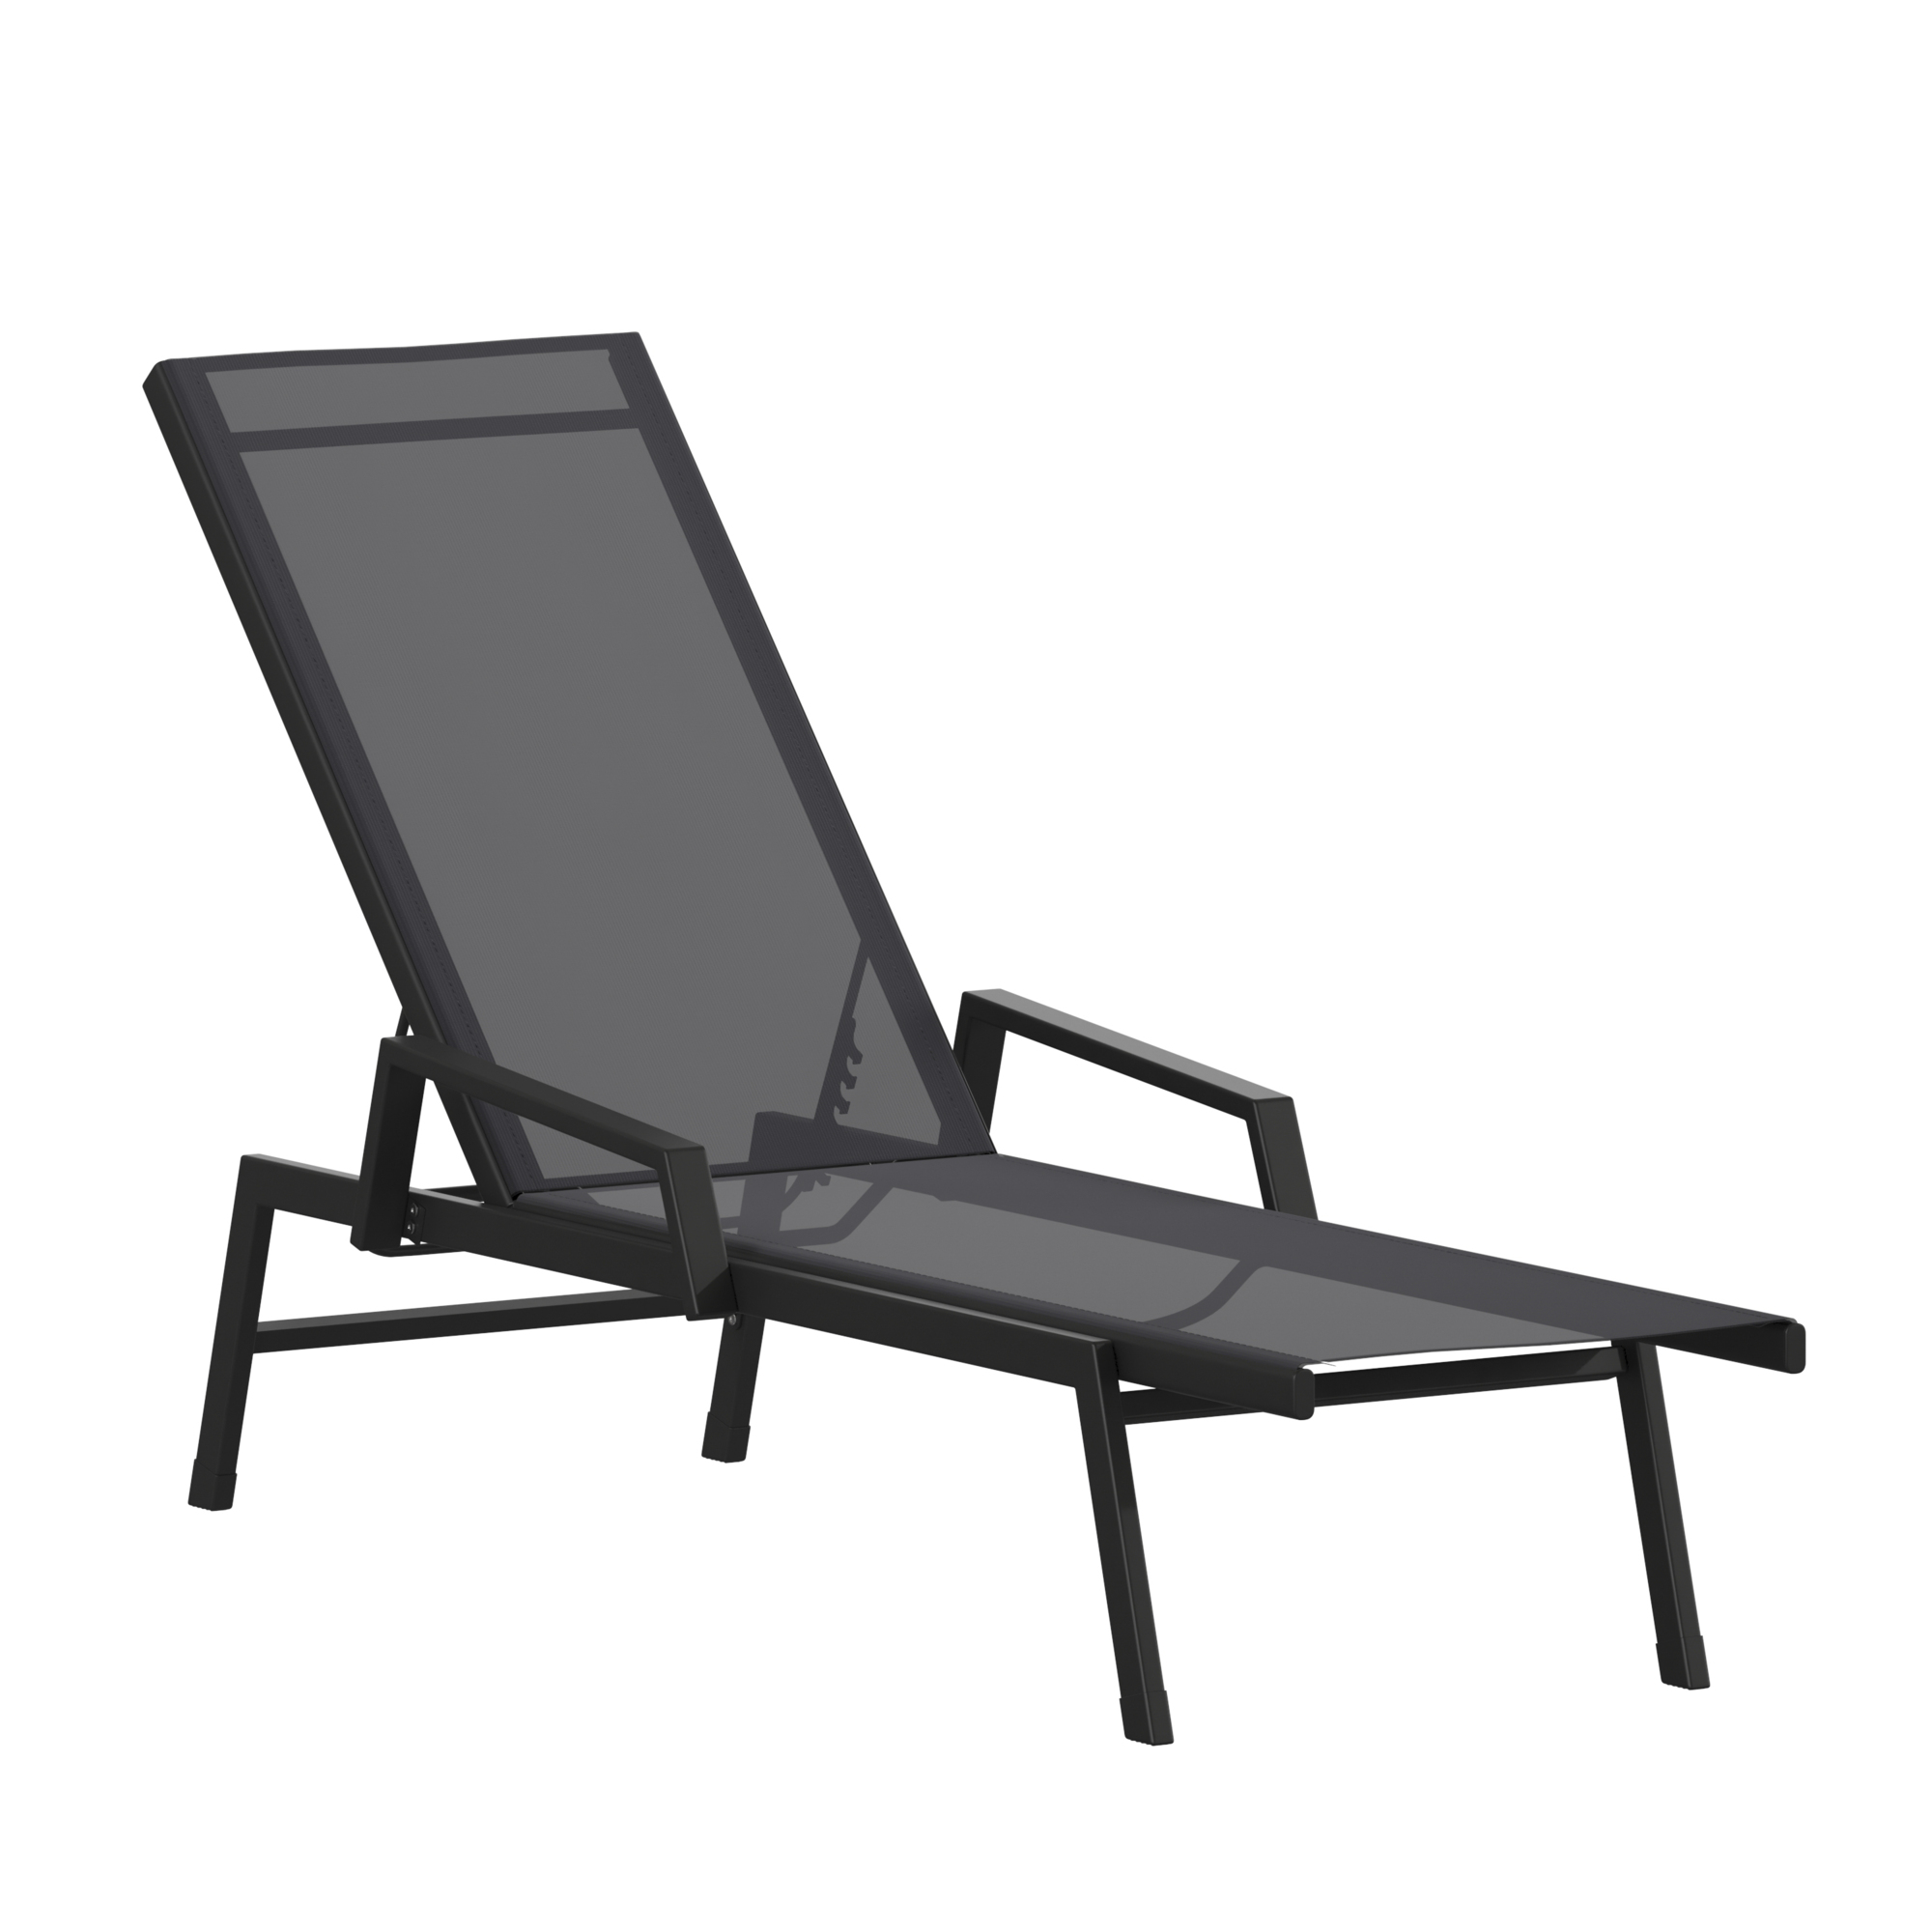 Flash Furniture, Black/Black Adjustable Chaise Lounge with Arms, Primary Color Black, Material Steel, Width 23.25 in, Model JJLC323BKBK